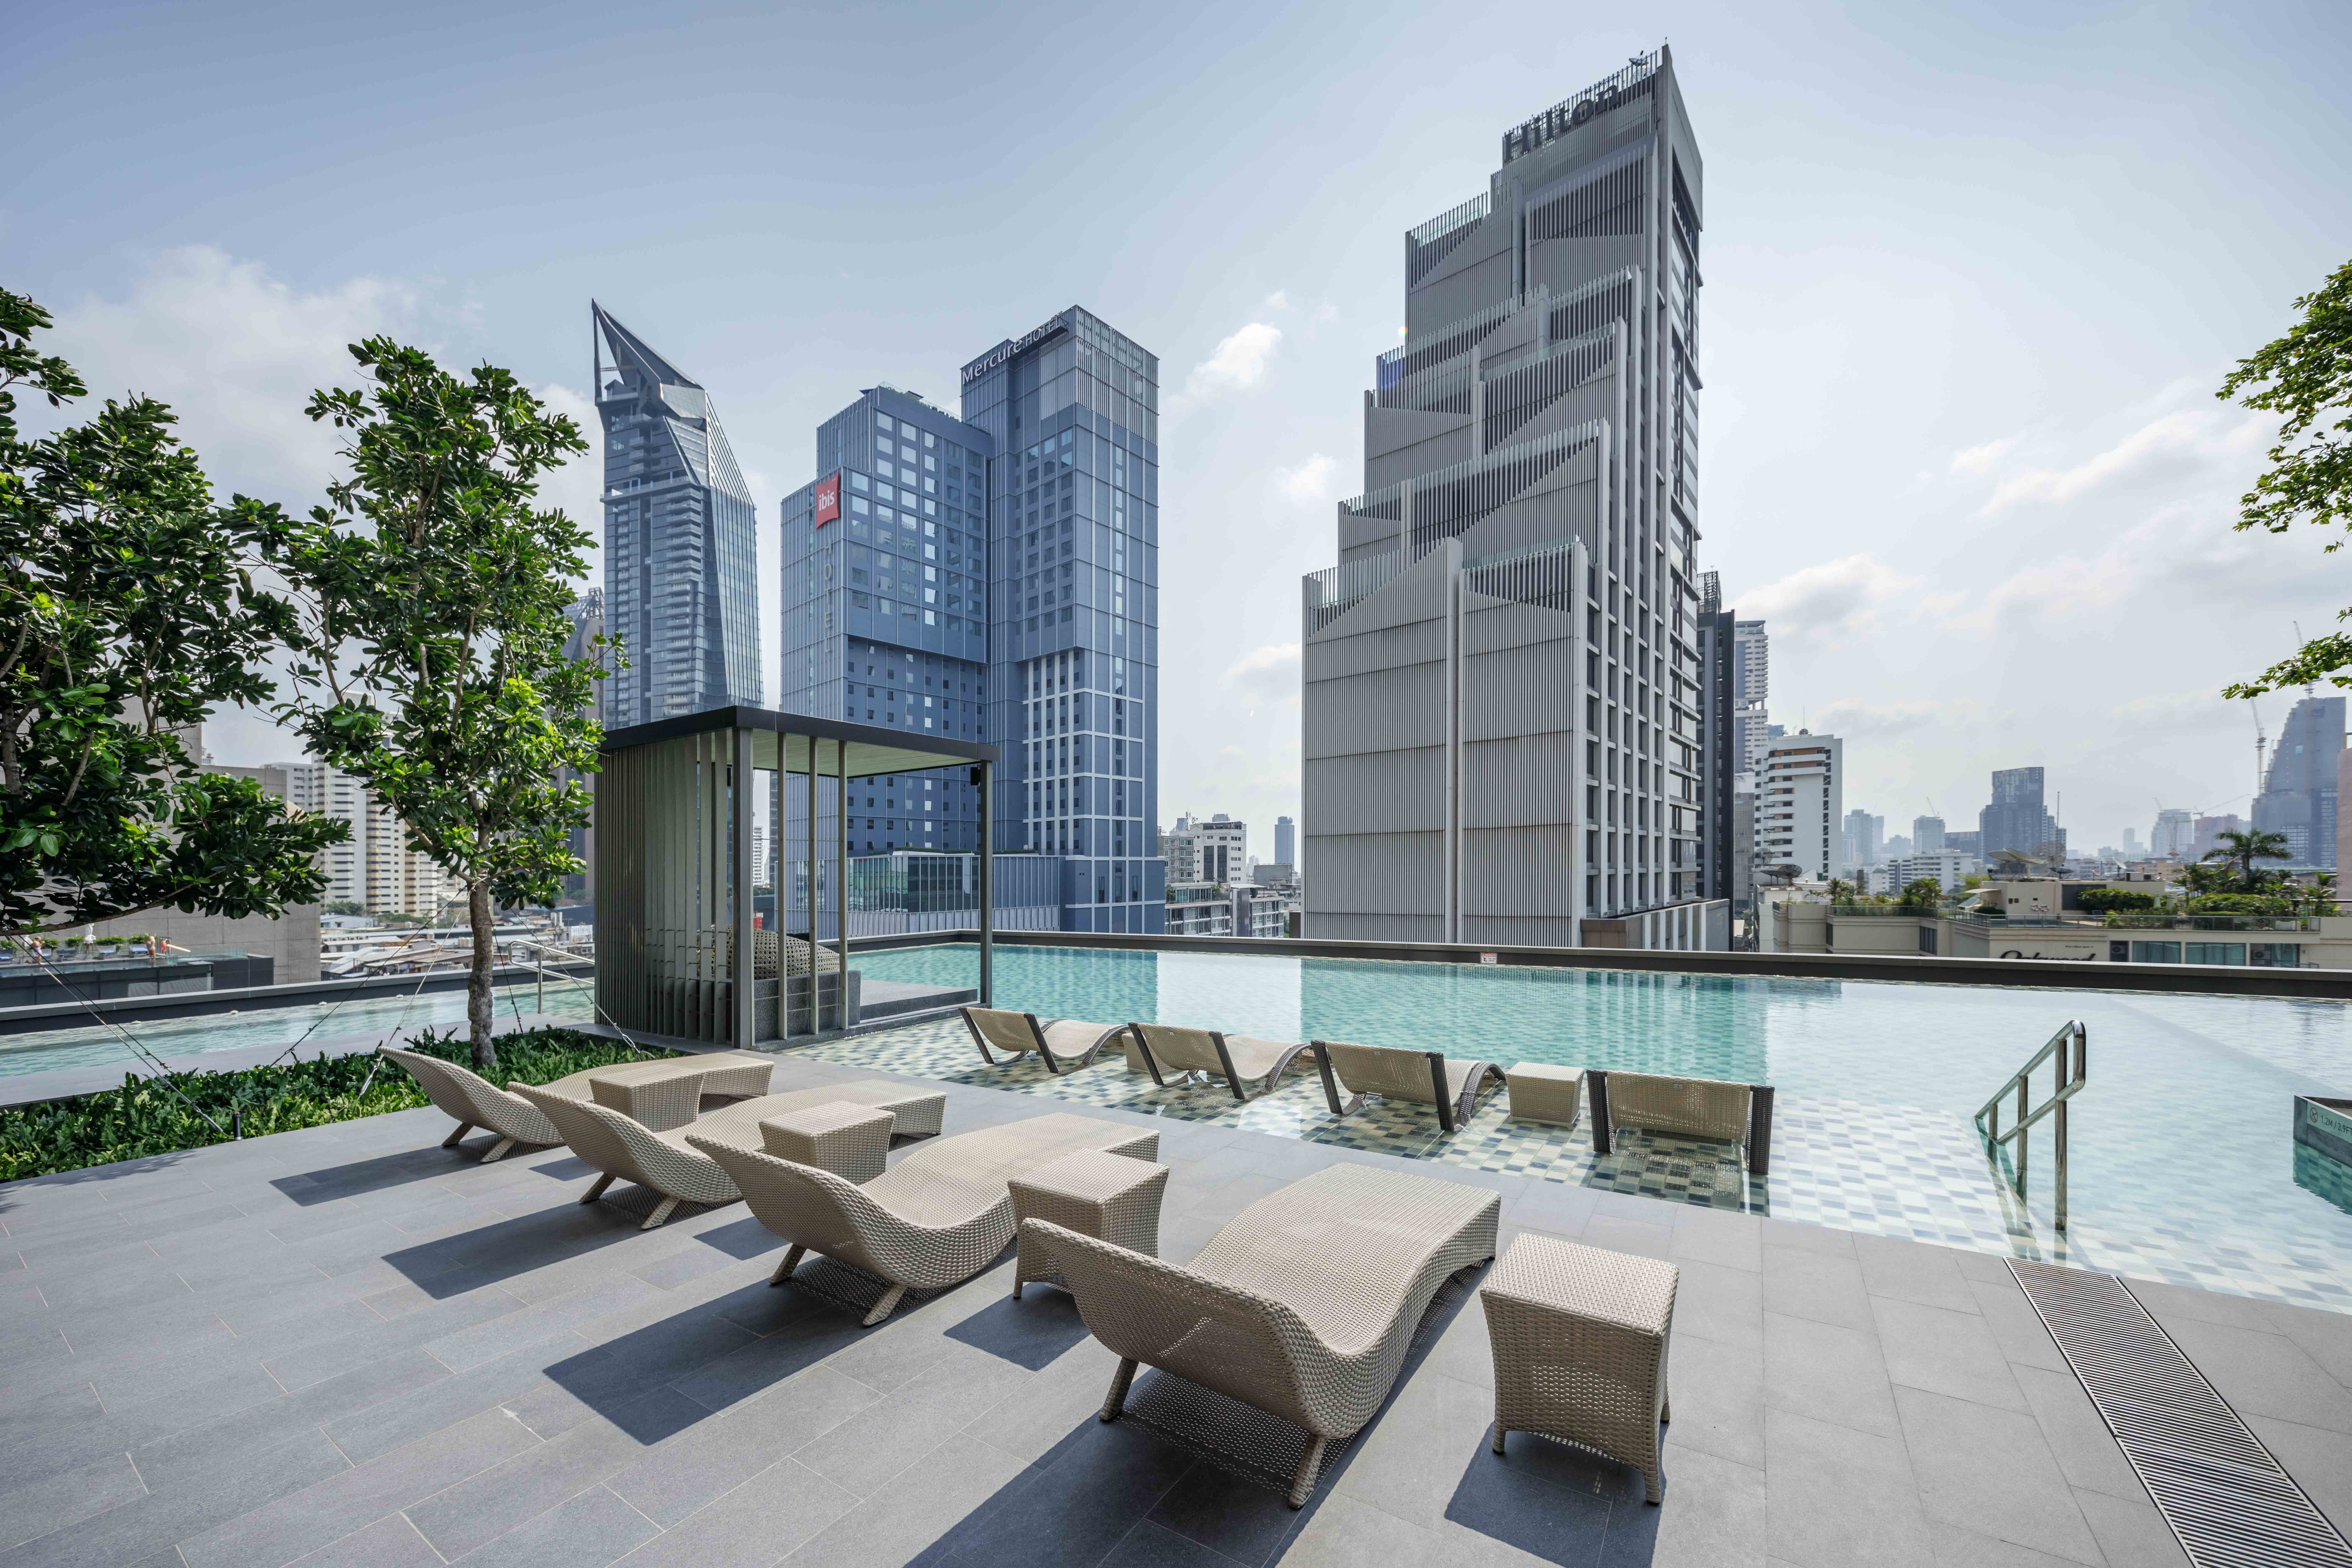 Singapore's Worldwide Hotels Buys Bangkok Hotel - Mingtiandi